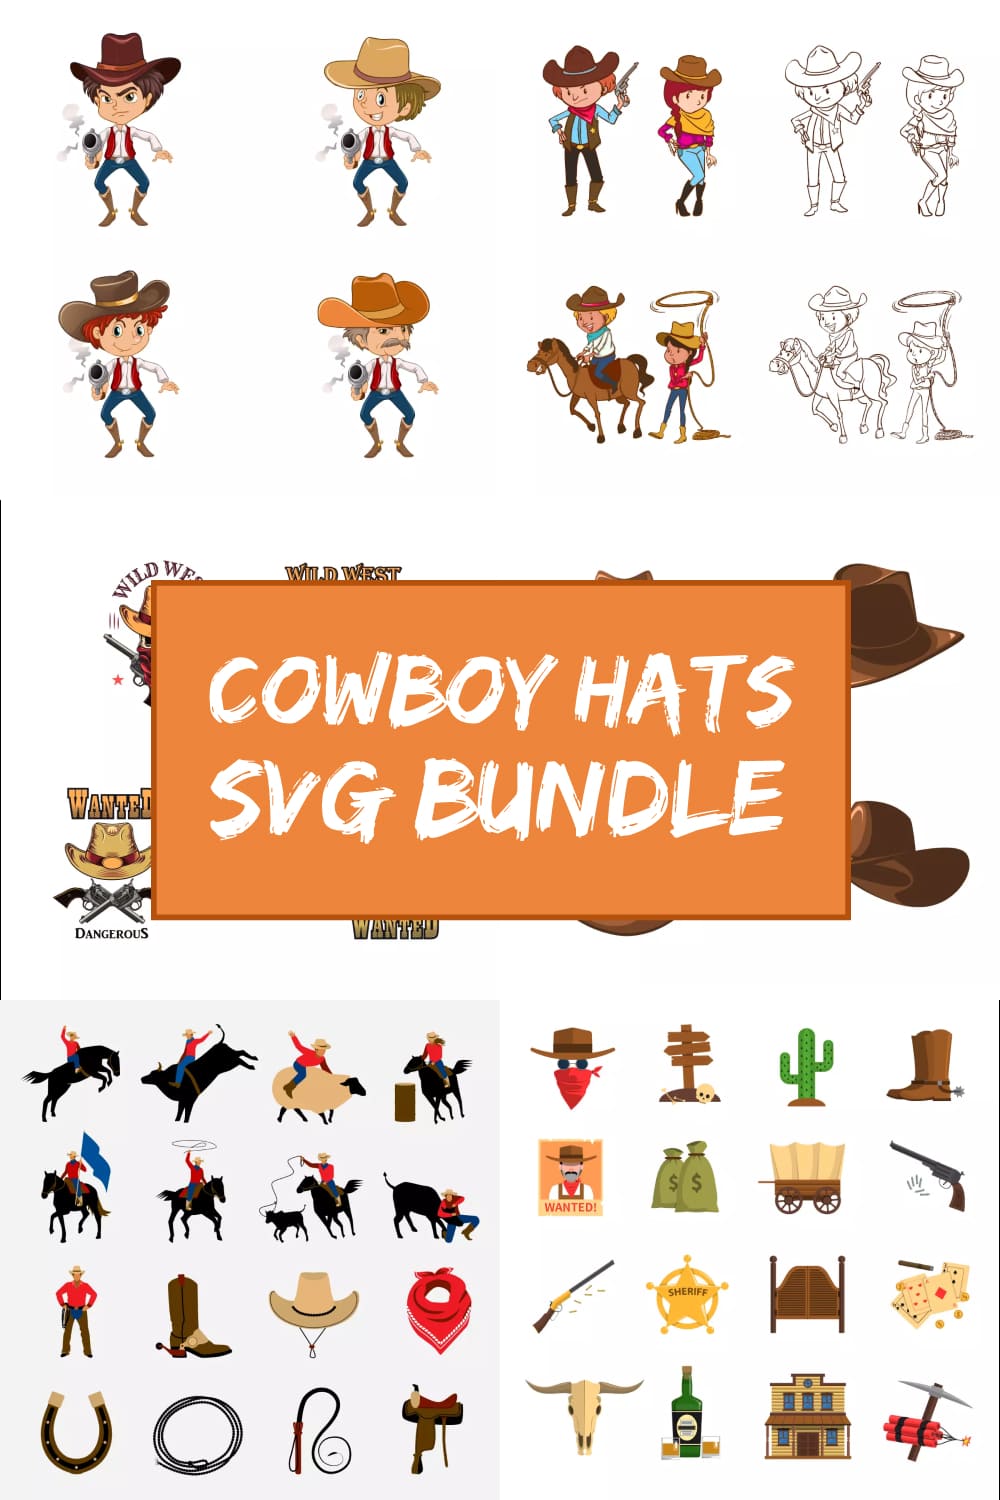 Cowboy hats SVG bundle, for pinterest.